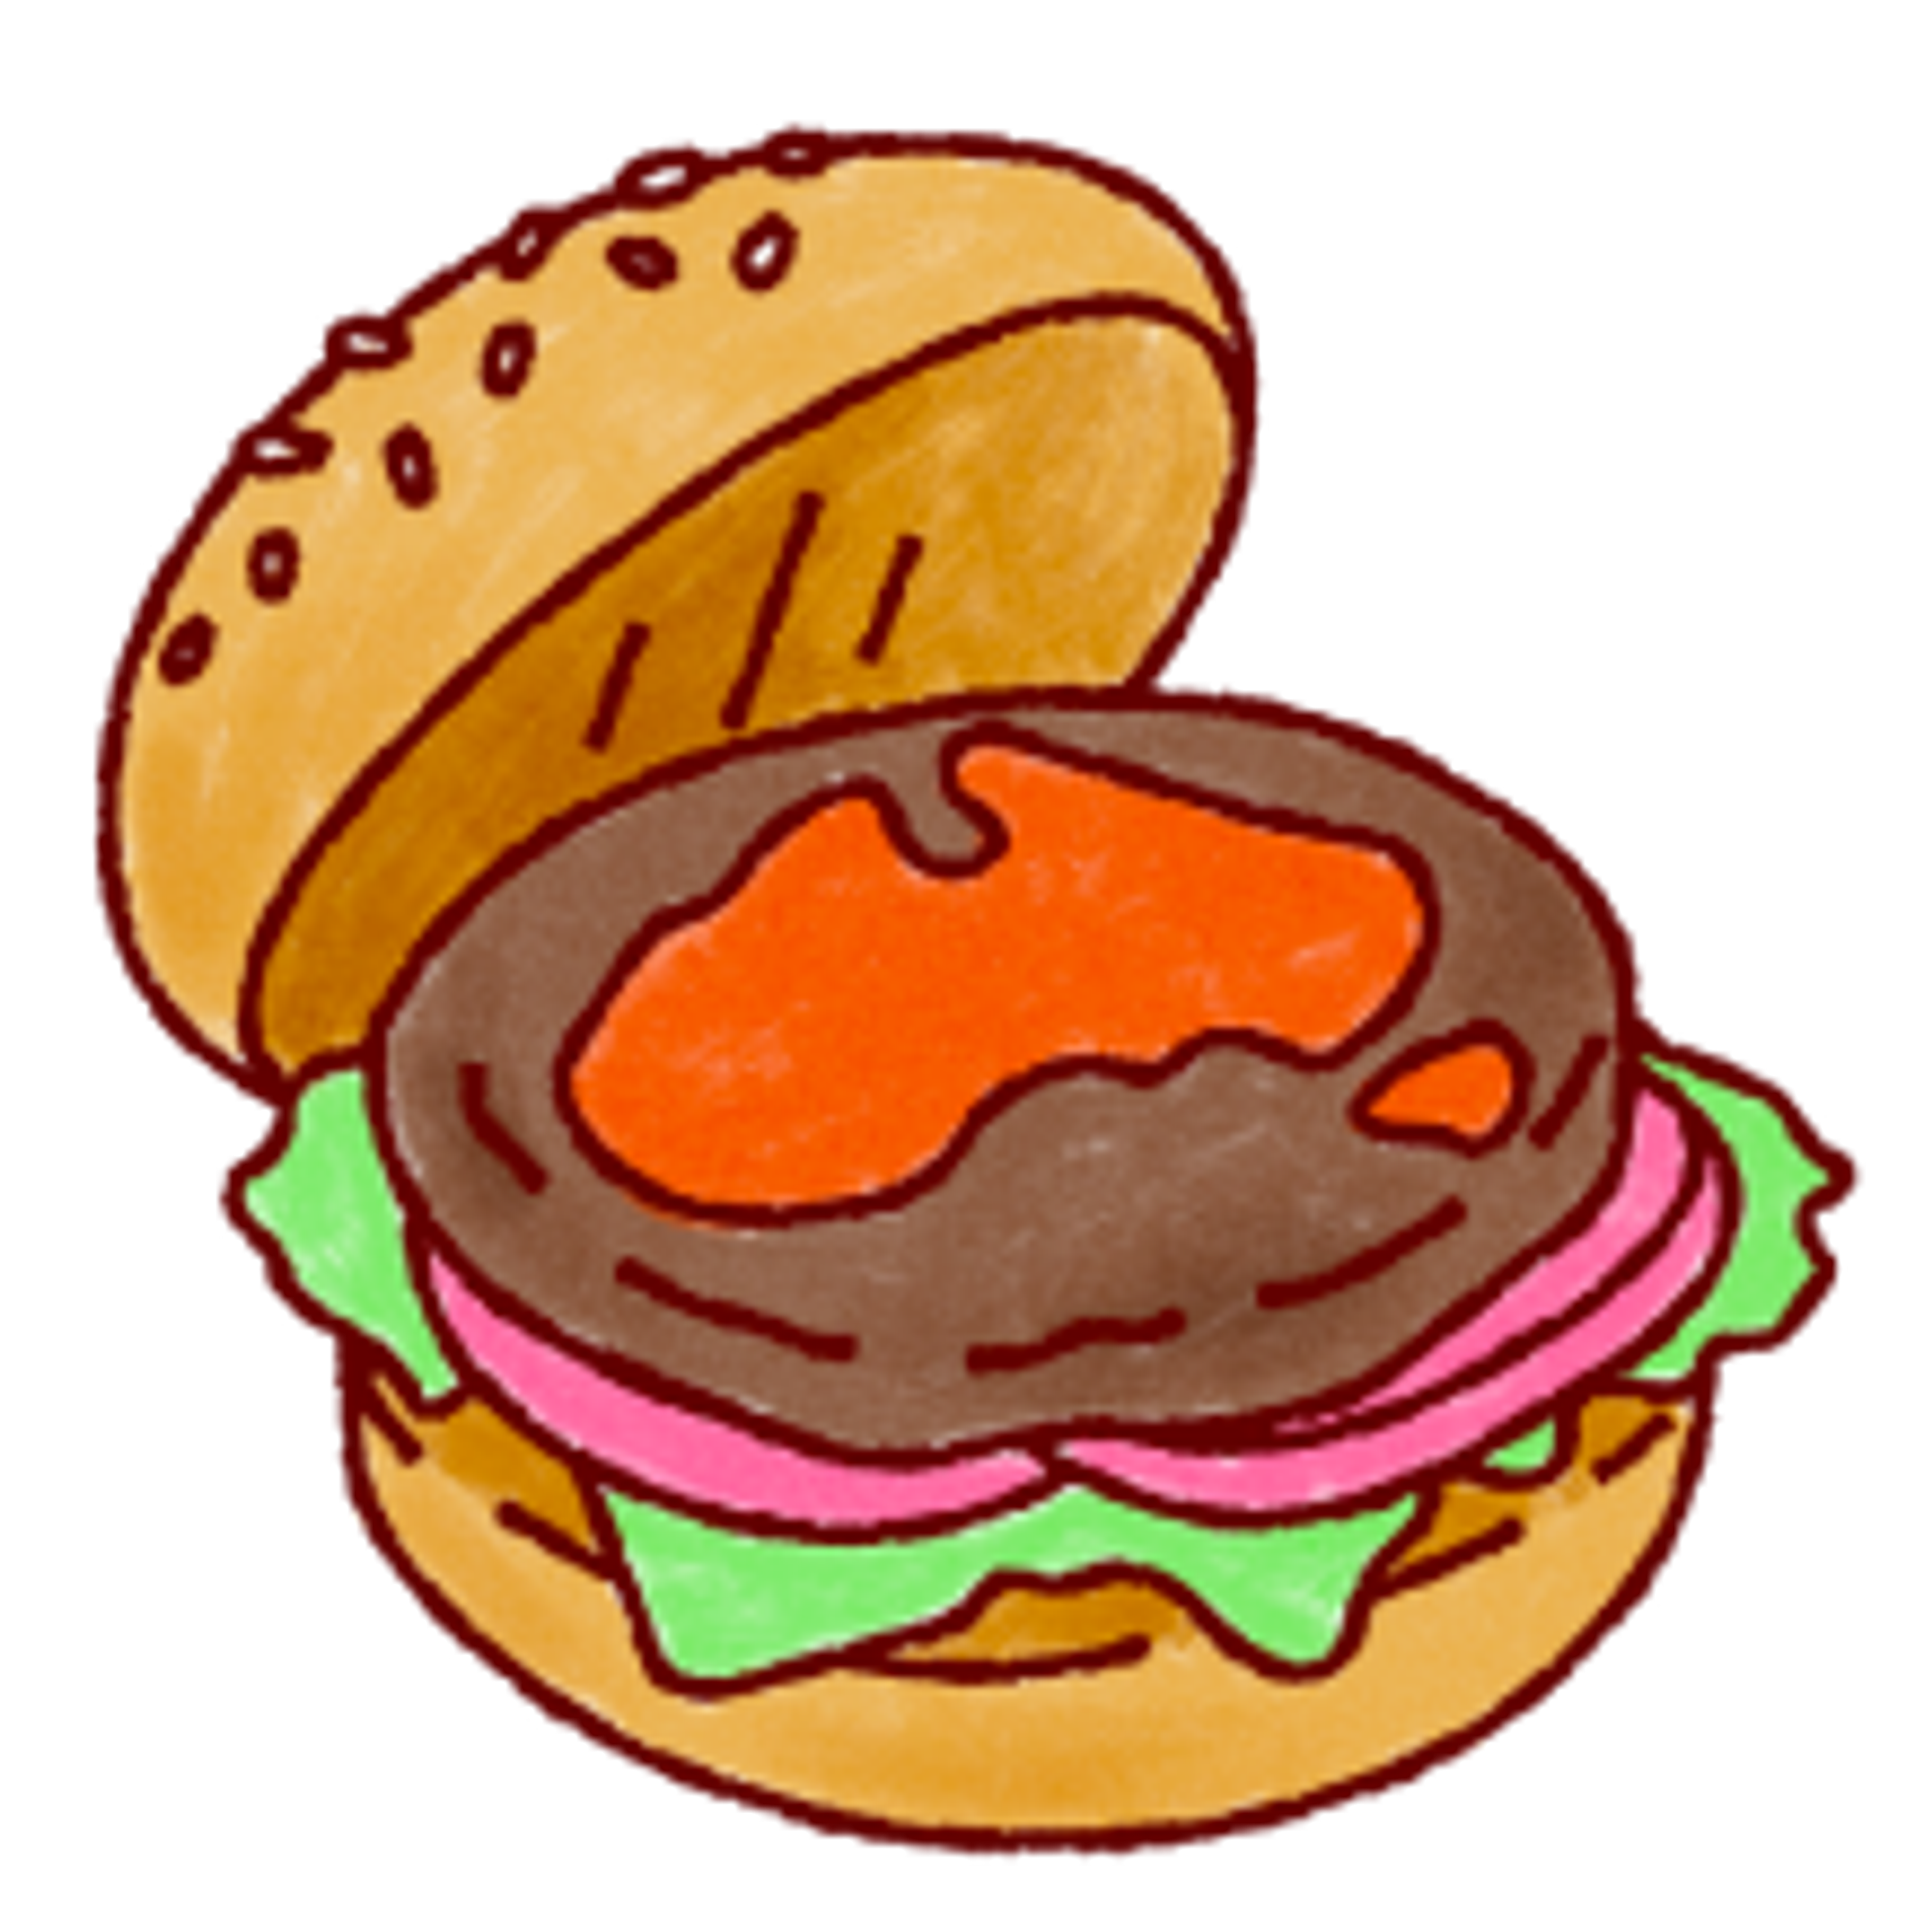 Australian burger